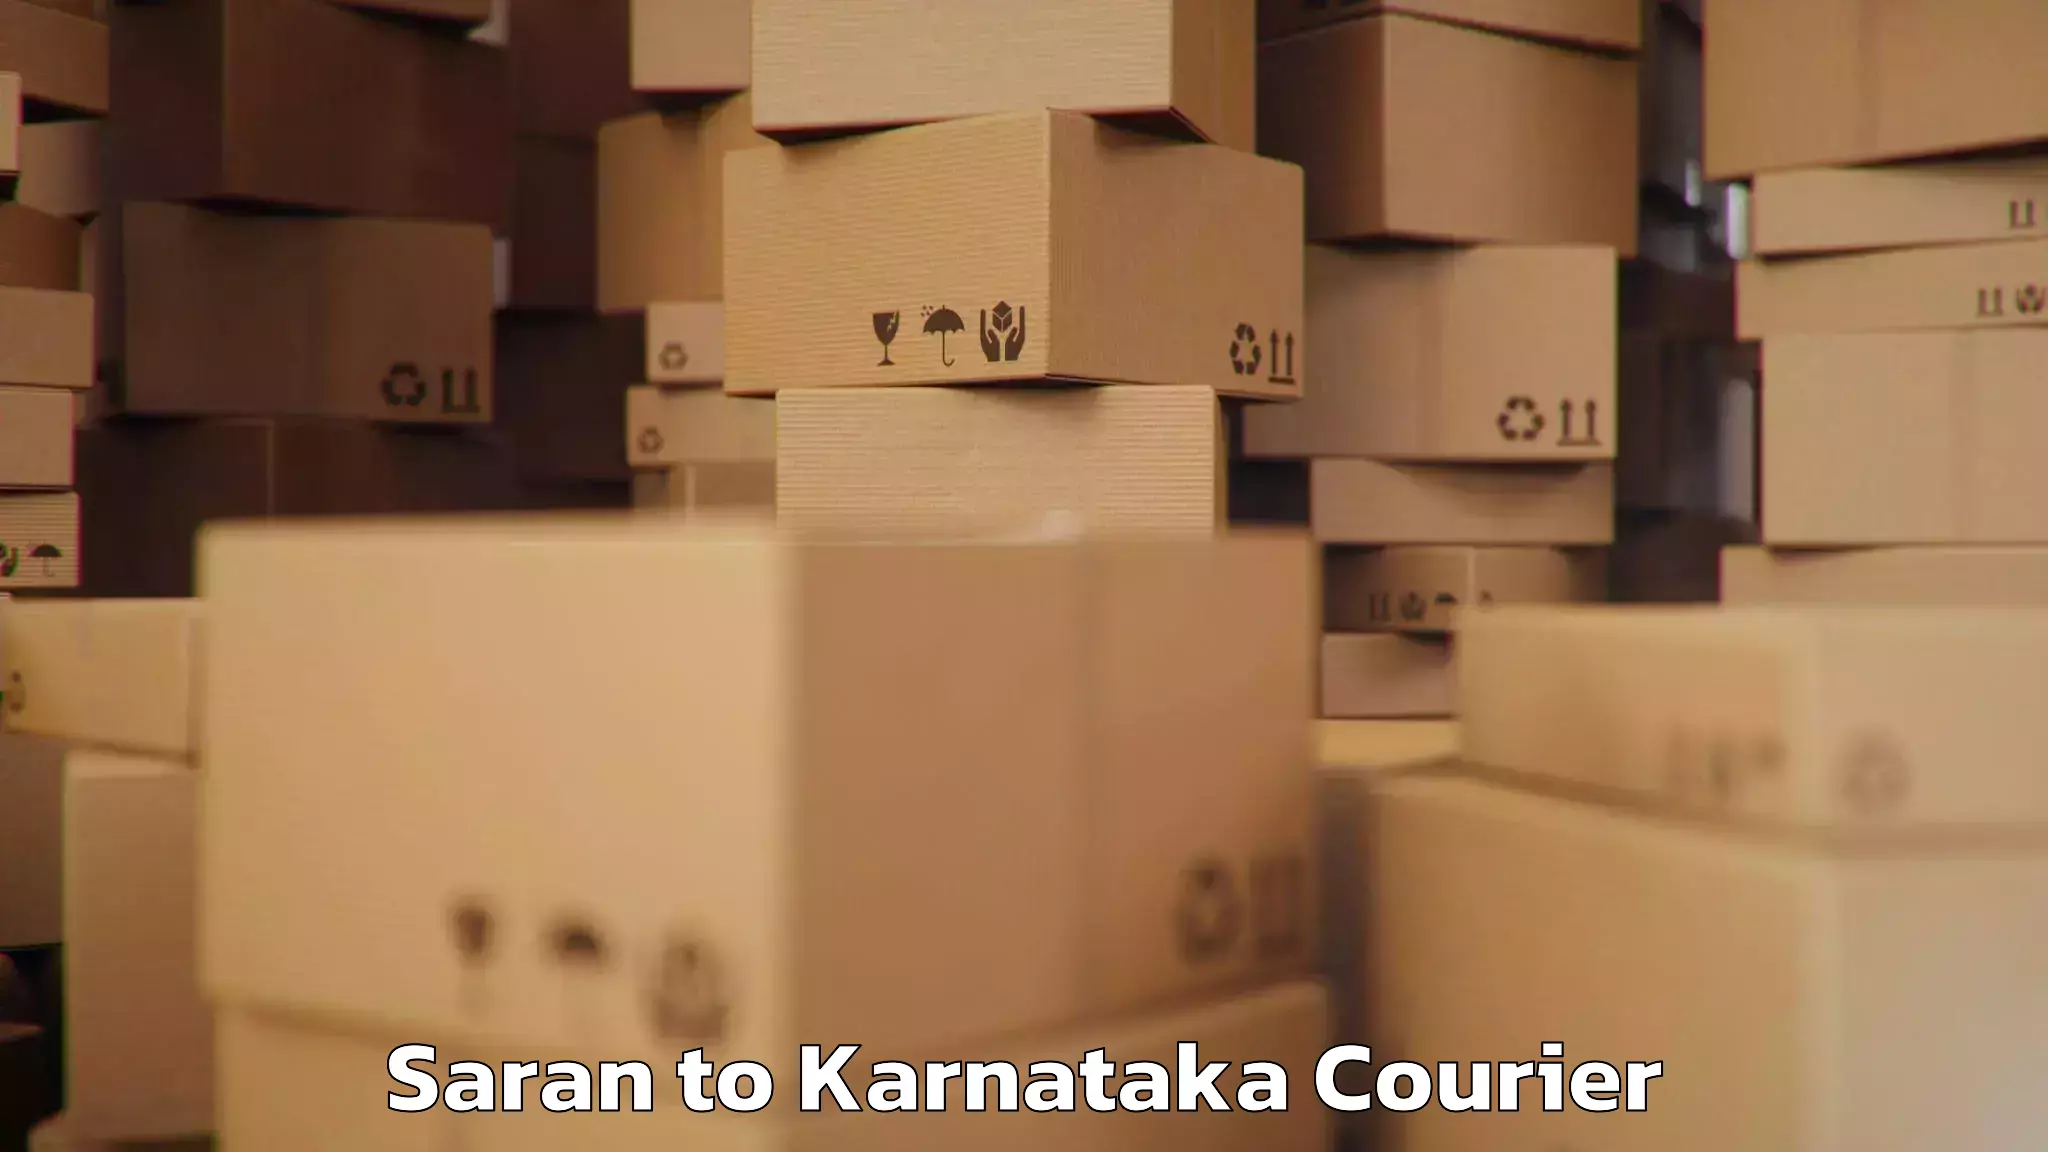 Baggage shipping experience Saran to Karnataka